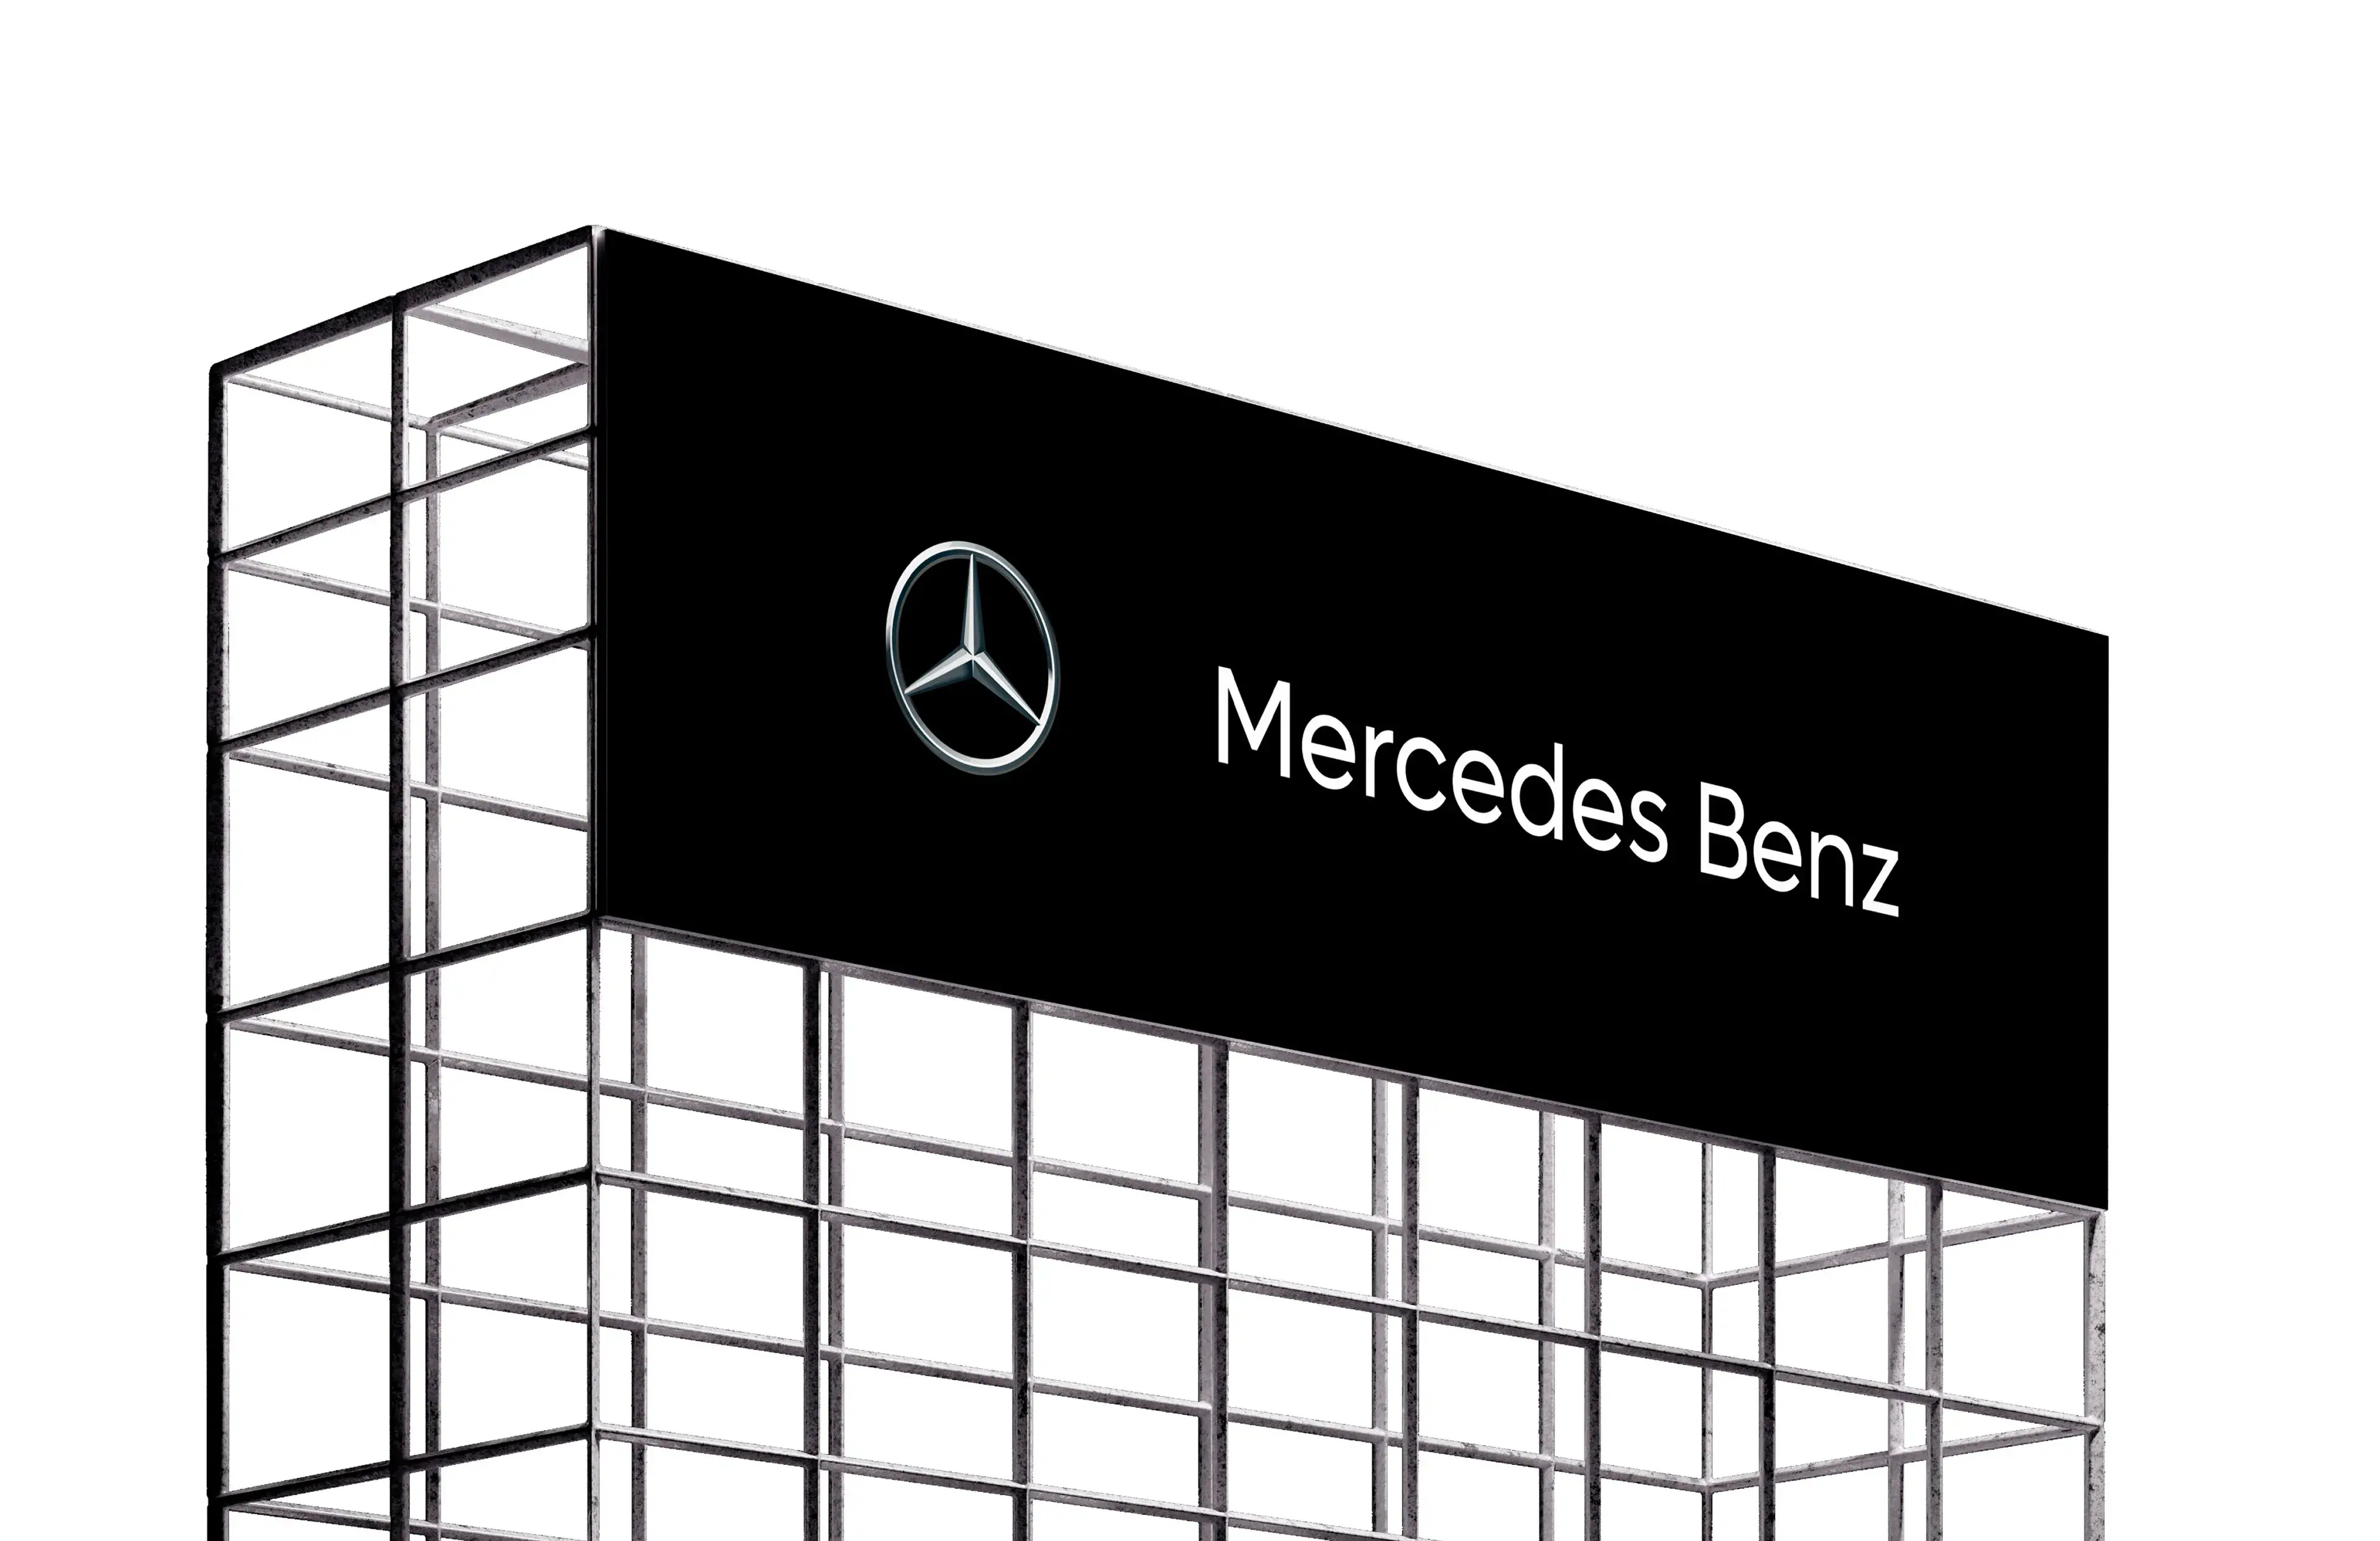 Mercedes-Benz GLC 300e Configurator - Vehicles